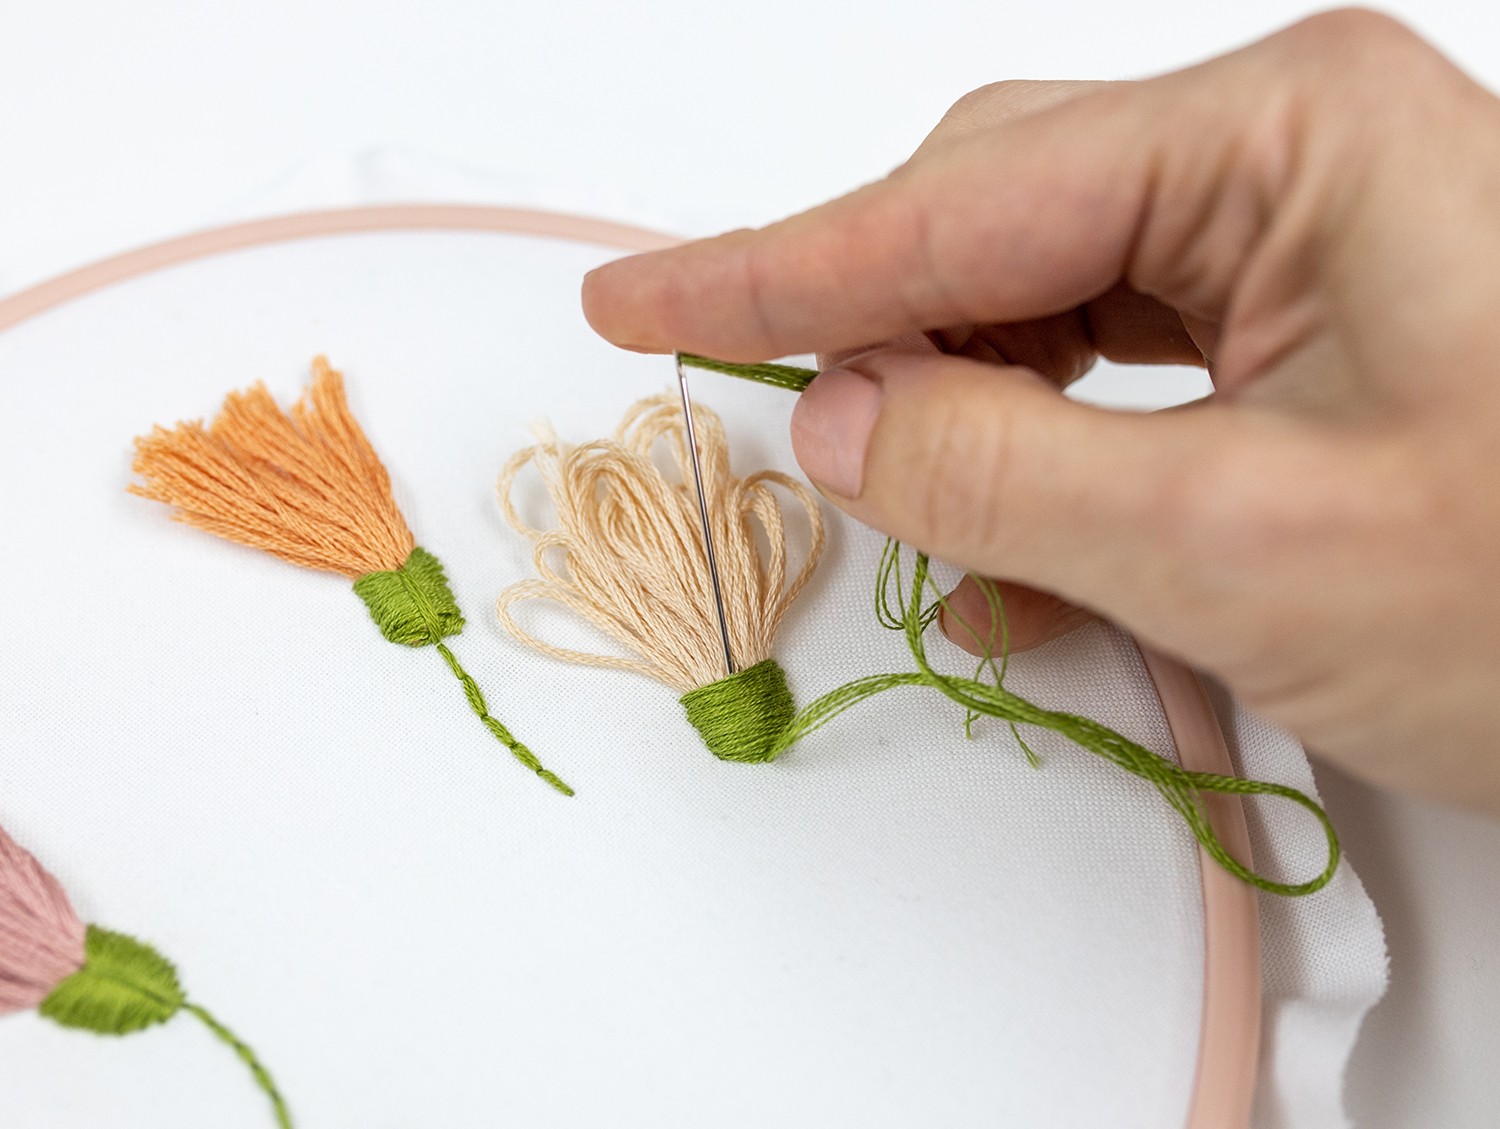 A needle creates a thread bundle flower.